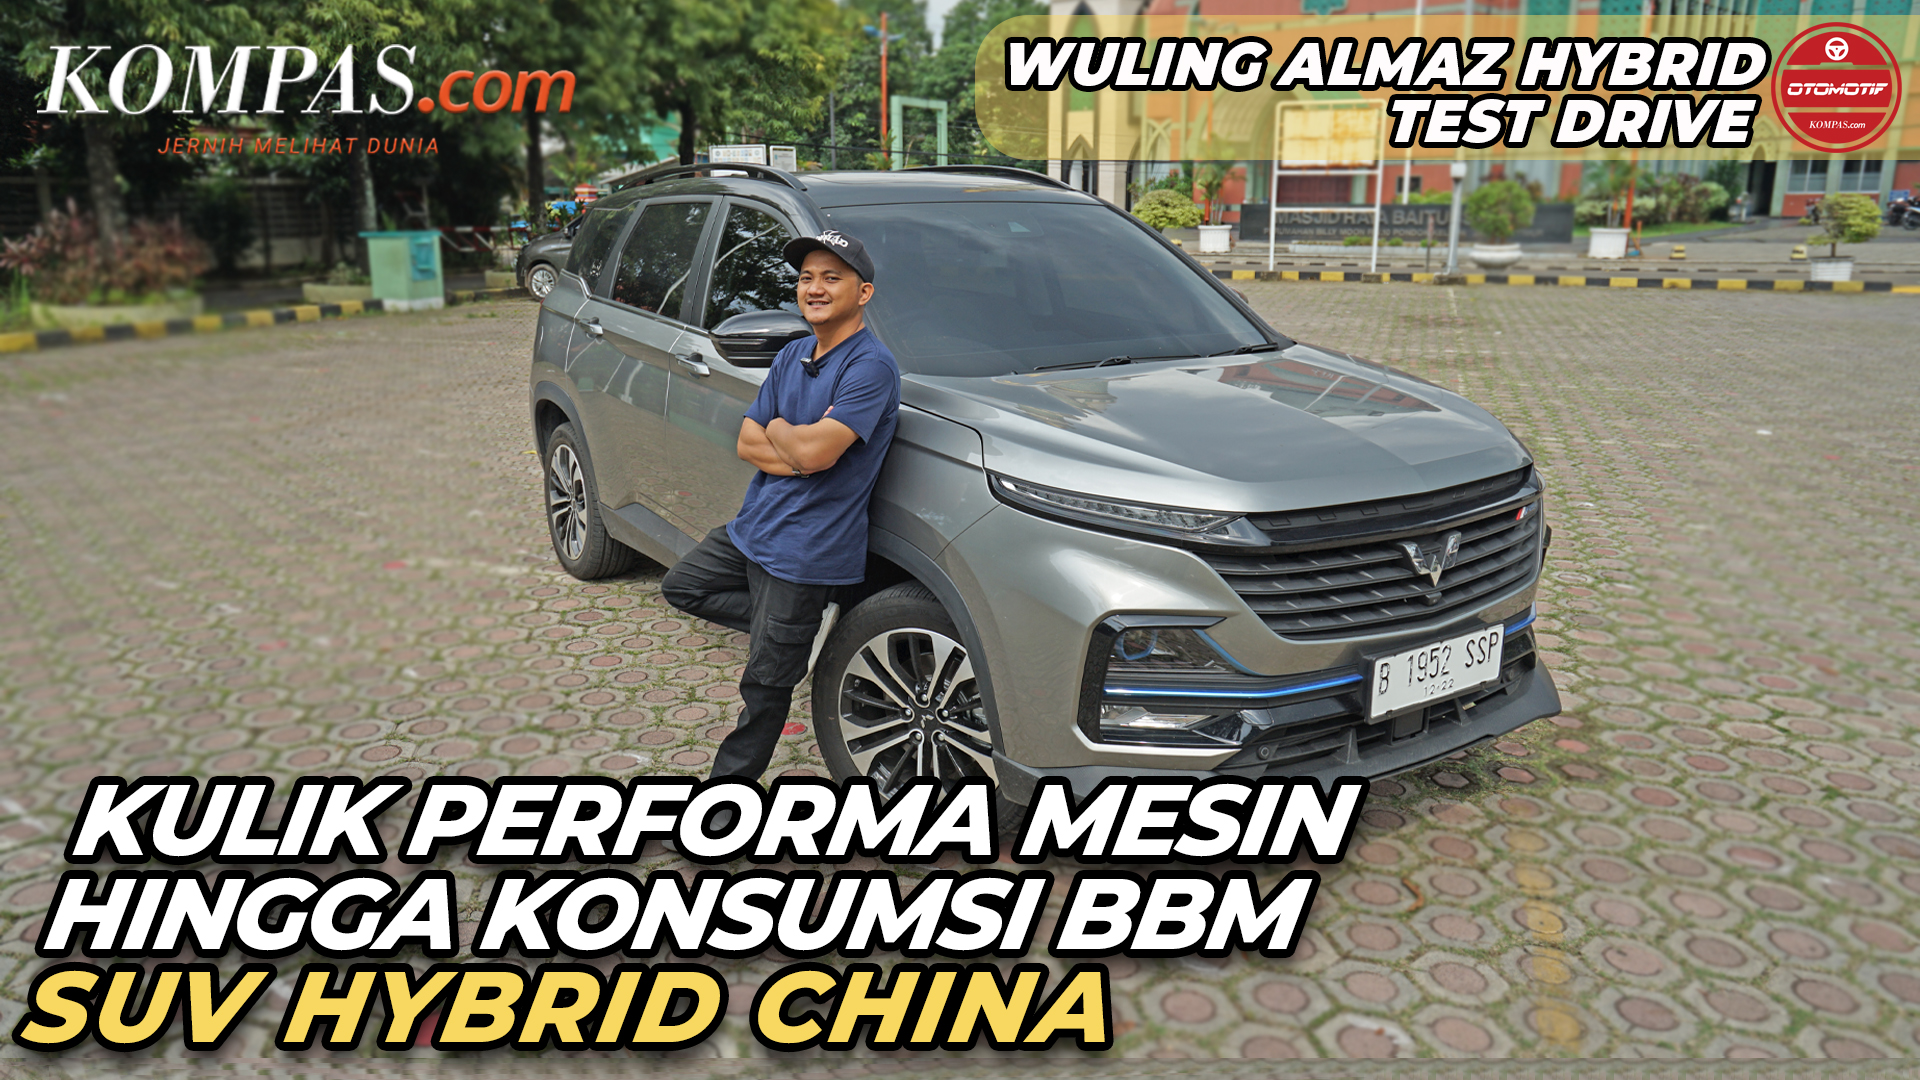 TEST DRIVE | WULING ALMAZ HYBRID | Kulik Performa Mesin Hingga Konsumsi BBM SUV Hybrid China